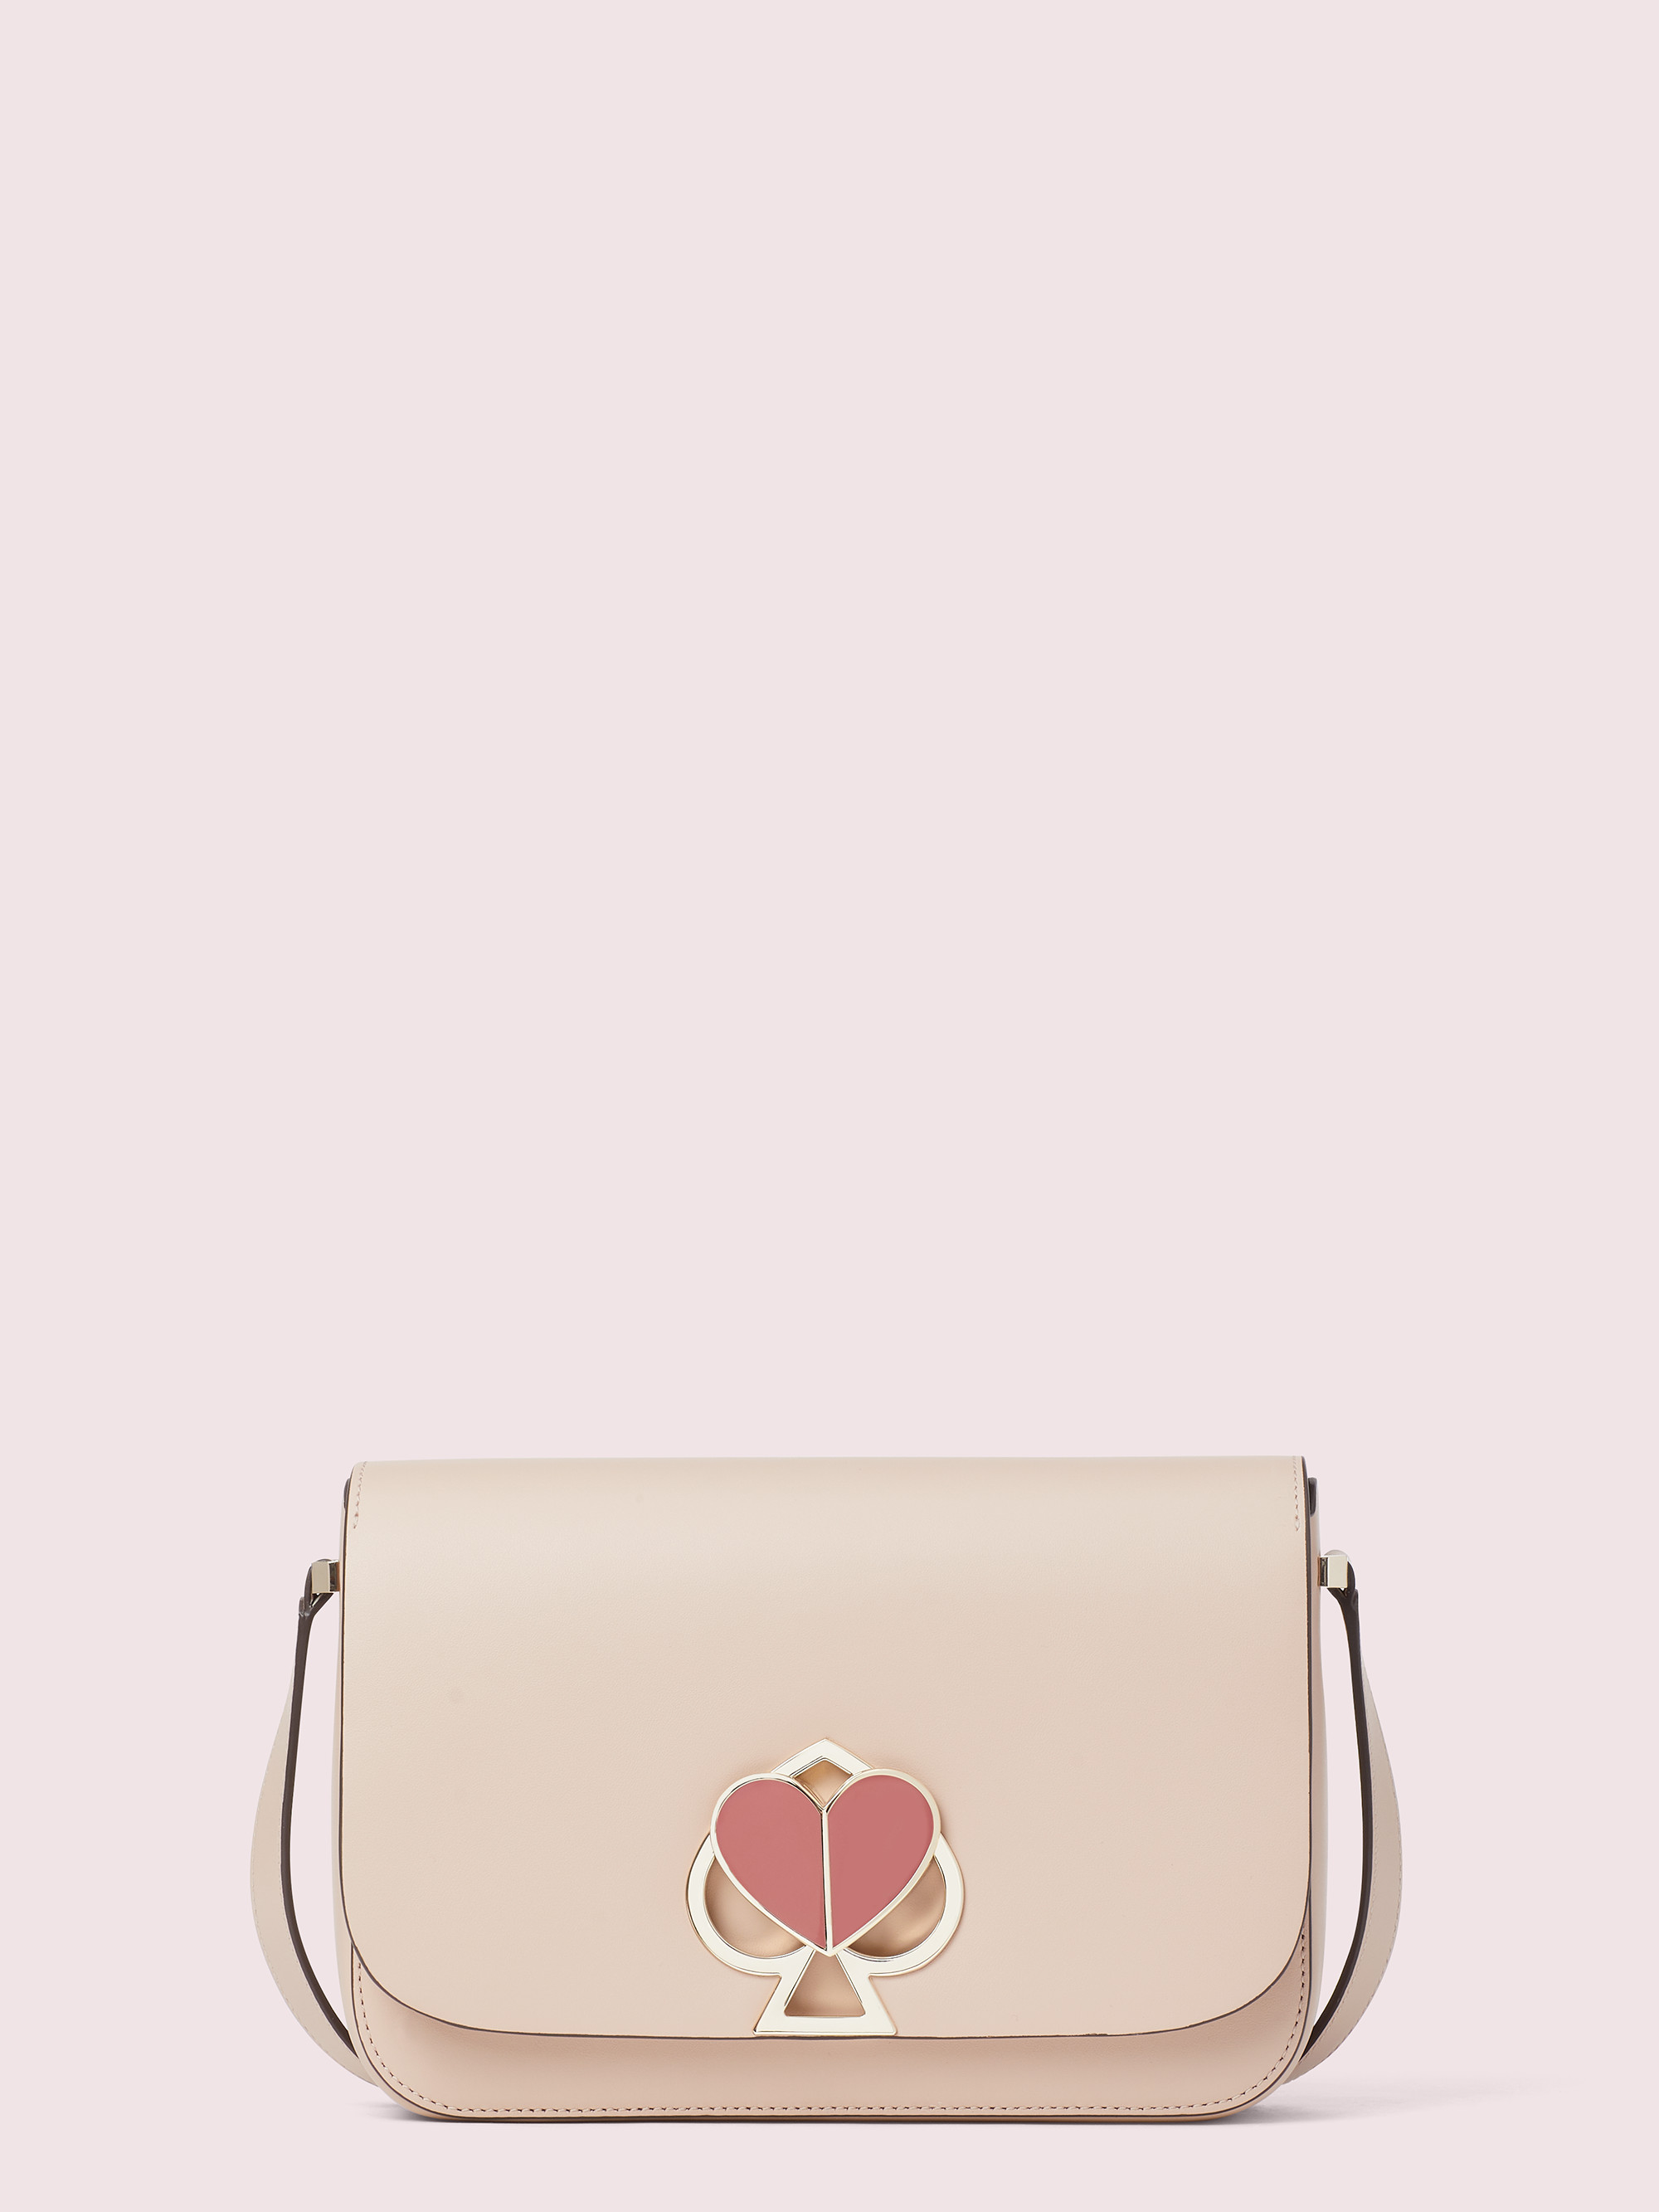 Fell in love since i saw it in Emily in Paris! Such a cute ✨bucket bag